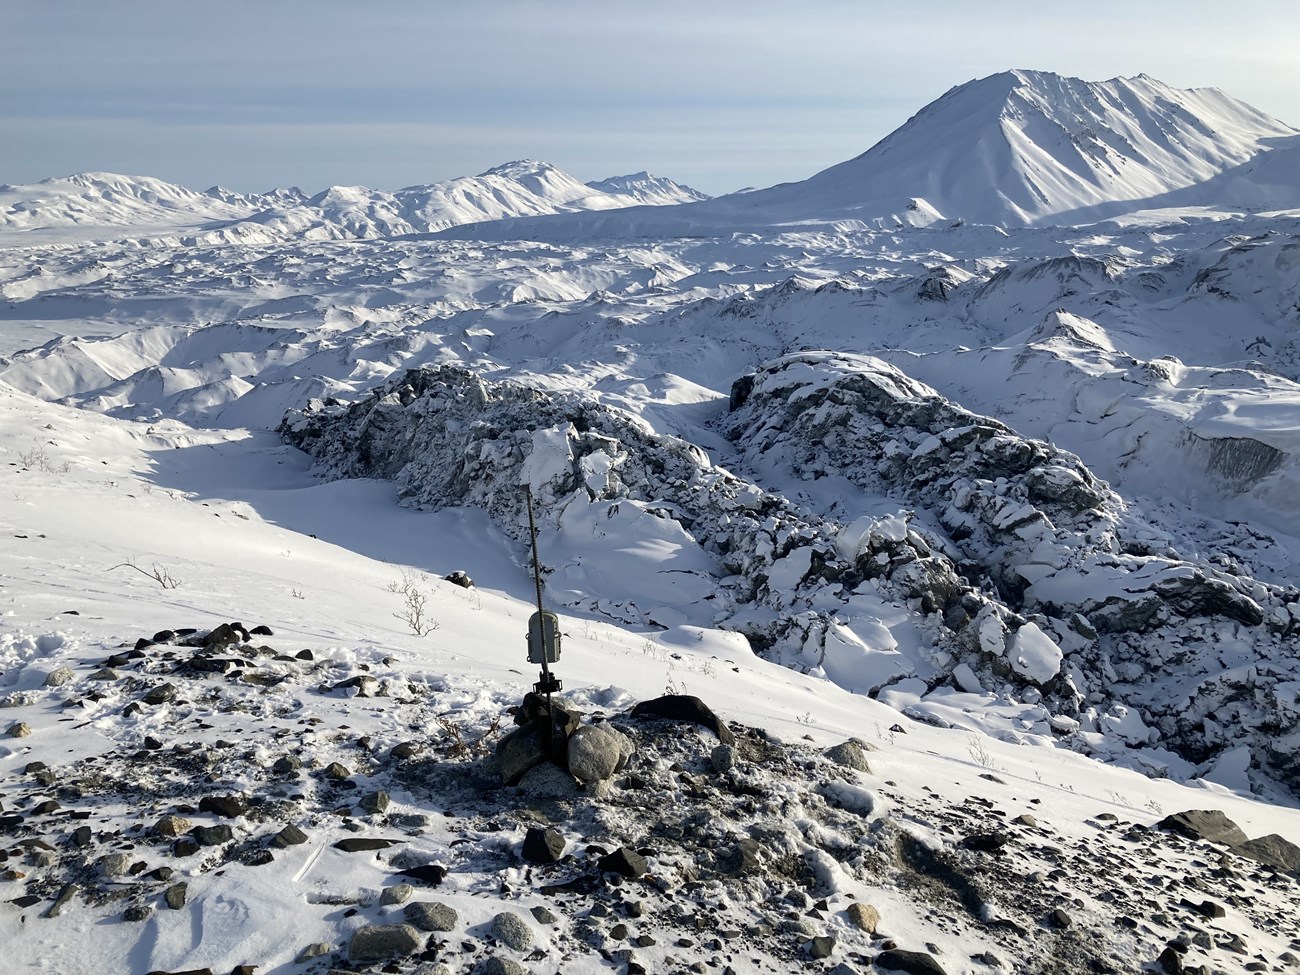 a camera perched on rocks overlooking a vast glacier